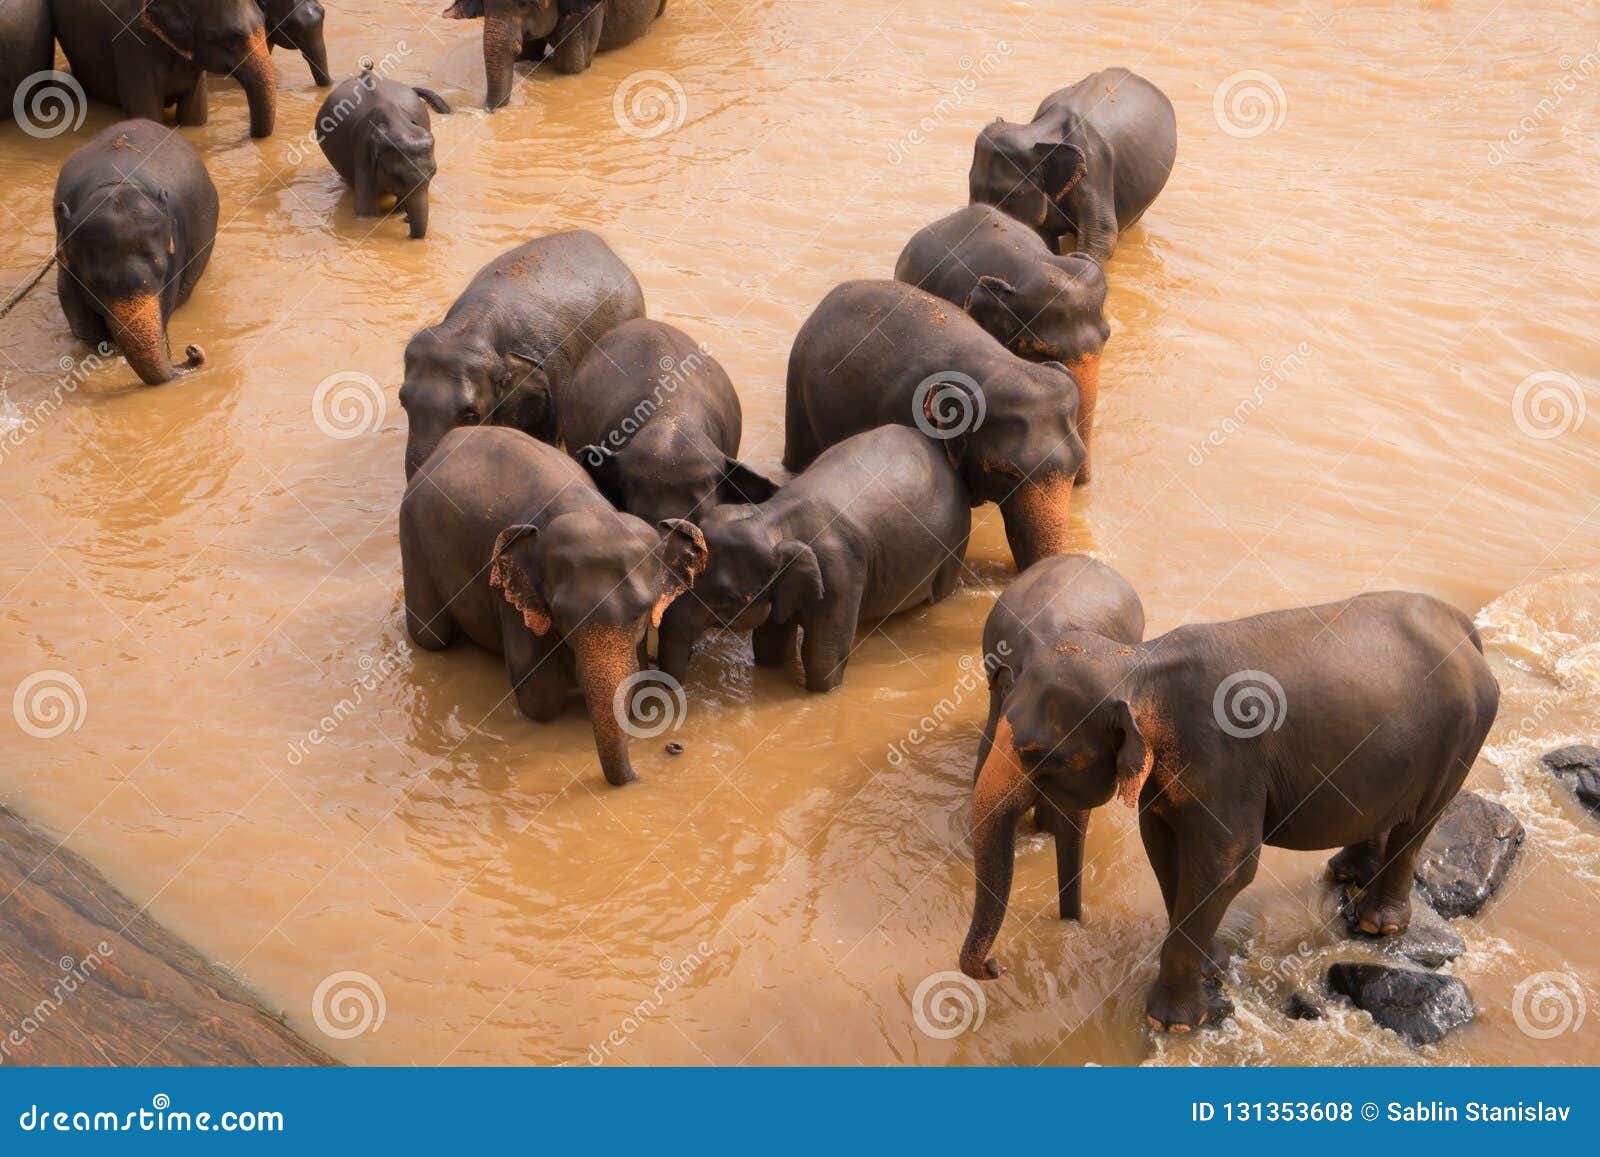 elephants bathe in the river.